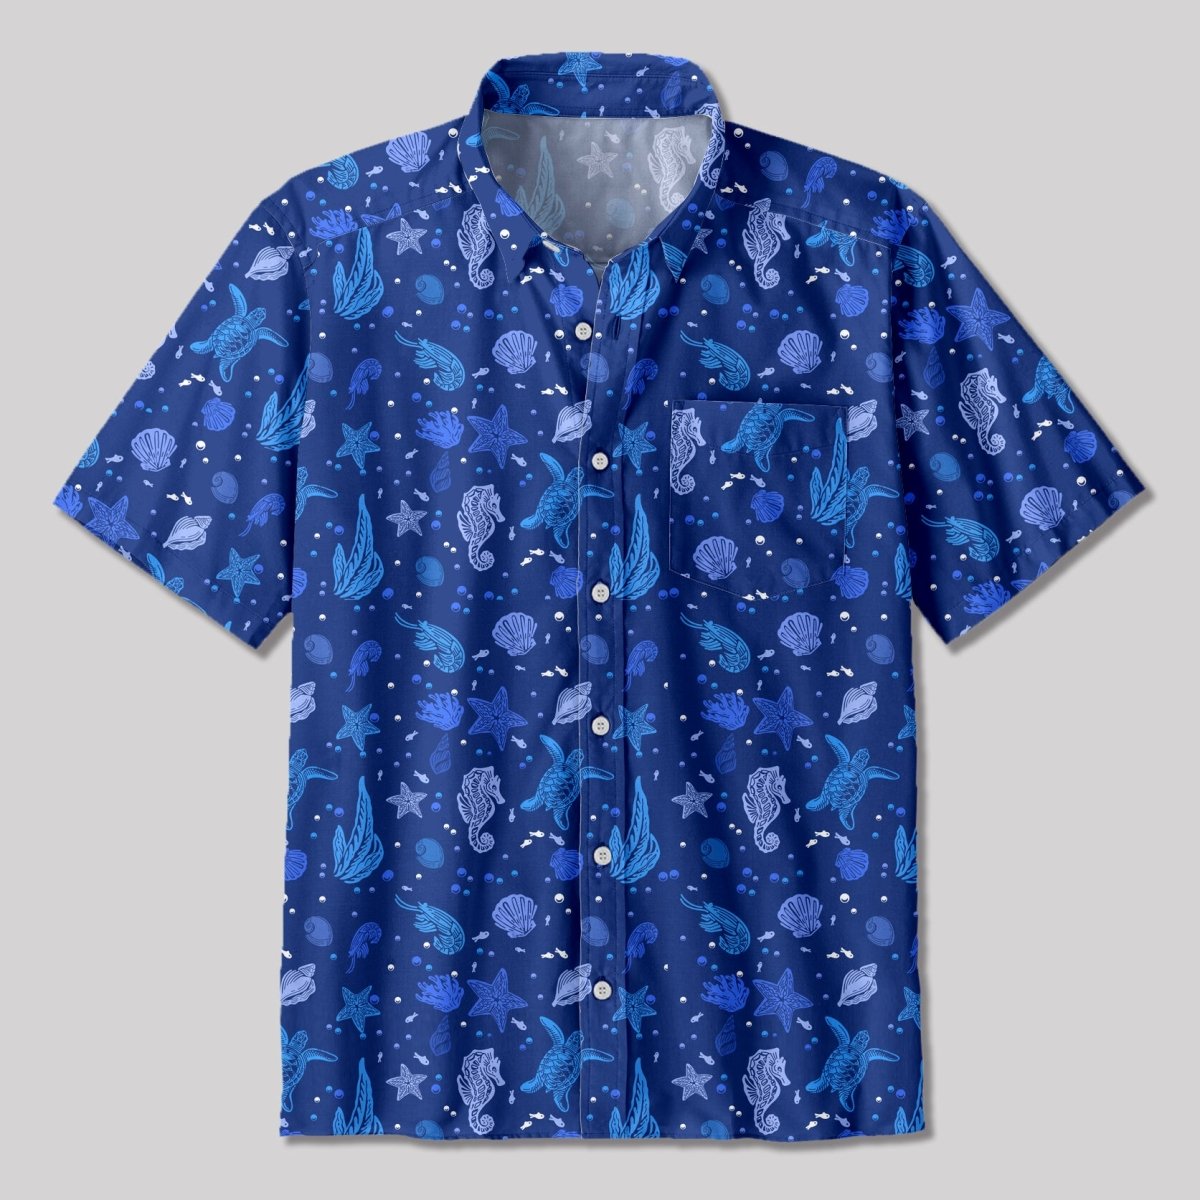 Marine Life Button Up Pocket Shirt - Geeksoutfit